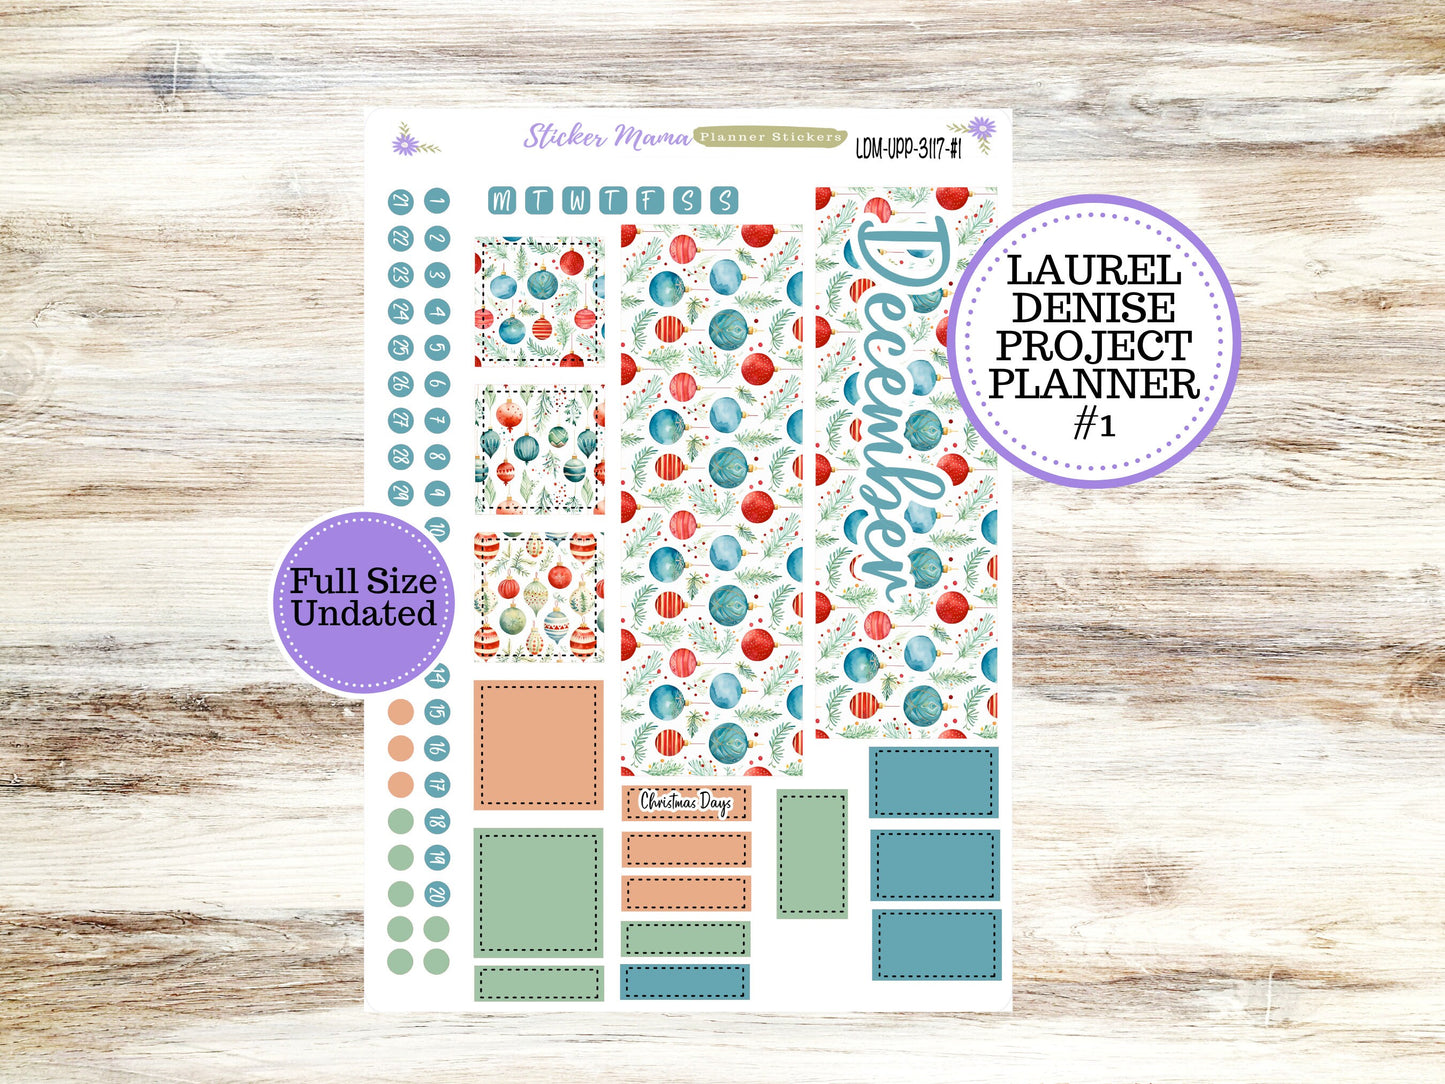 LAUREL DENISE PROJECT December Planner Kit #3117 || Merry Ornaments || Laurel Denise Kit || Laurel Denise Stickers ||  || December ld